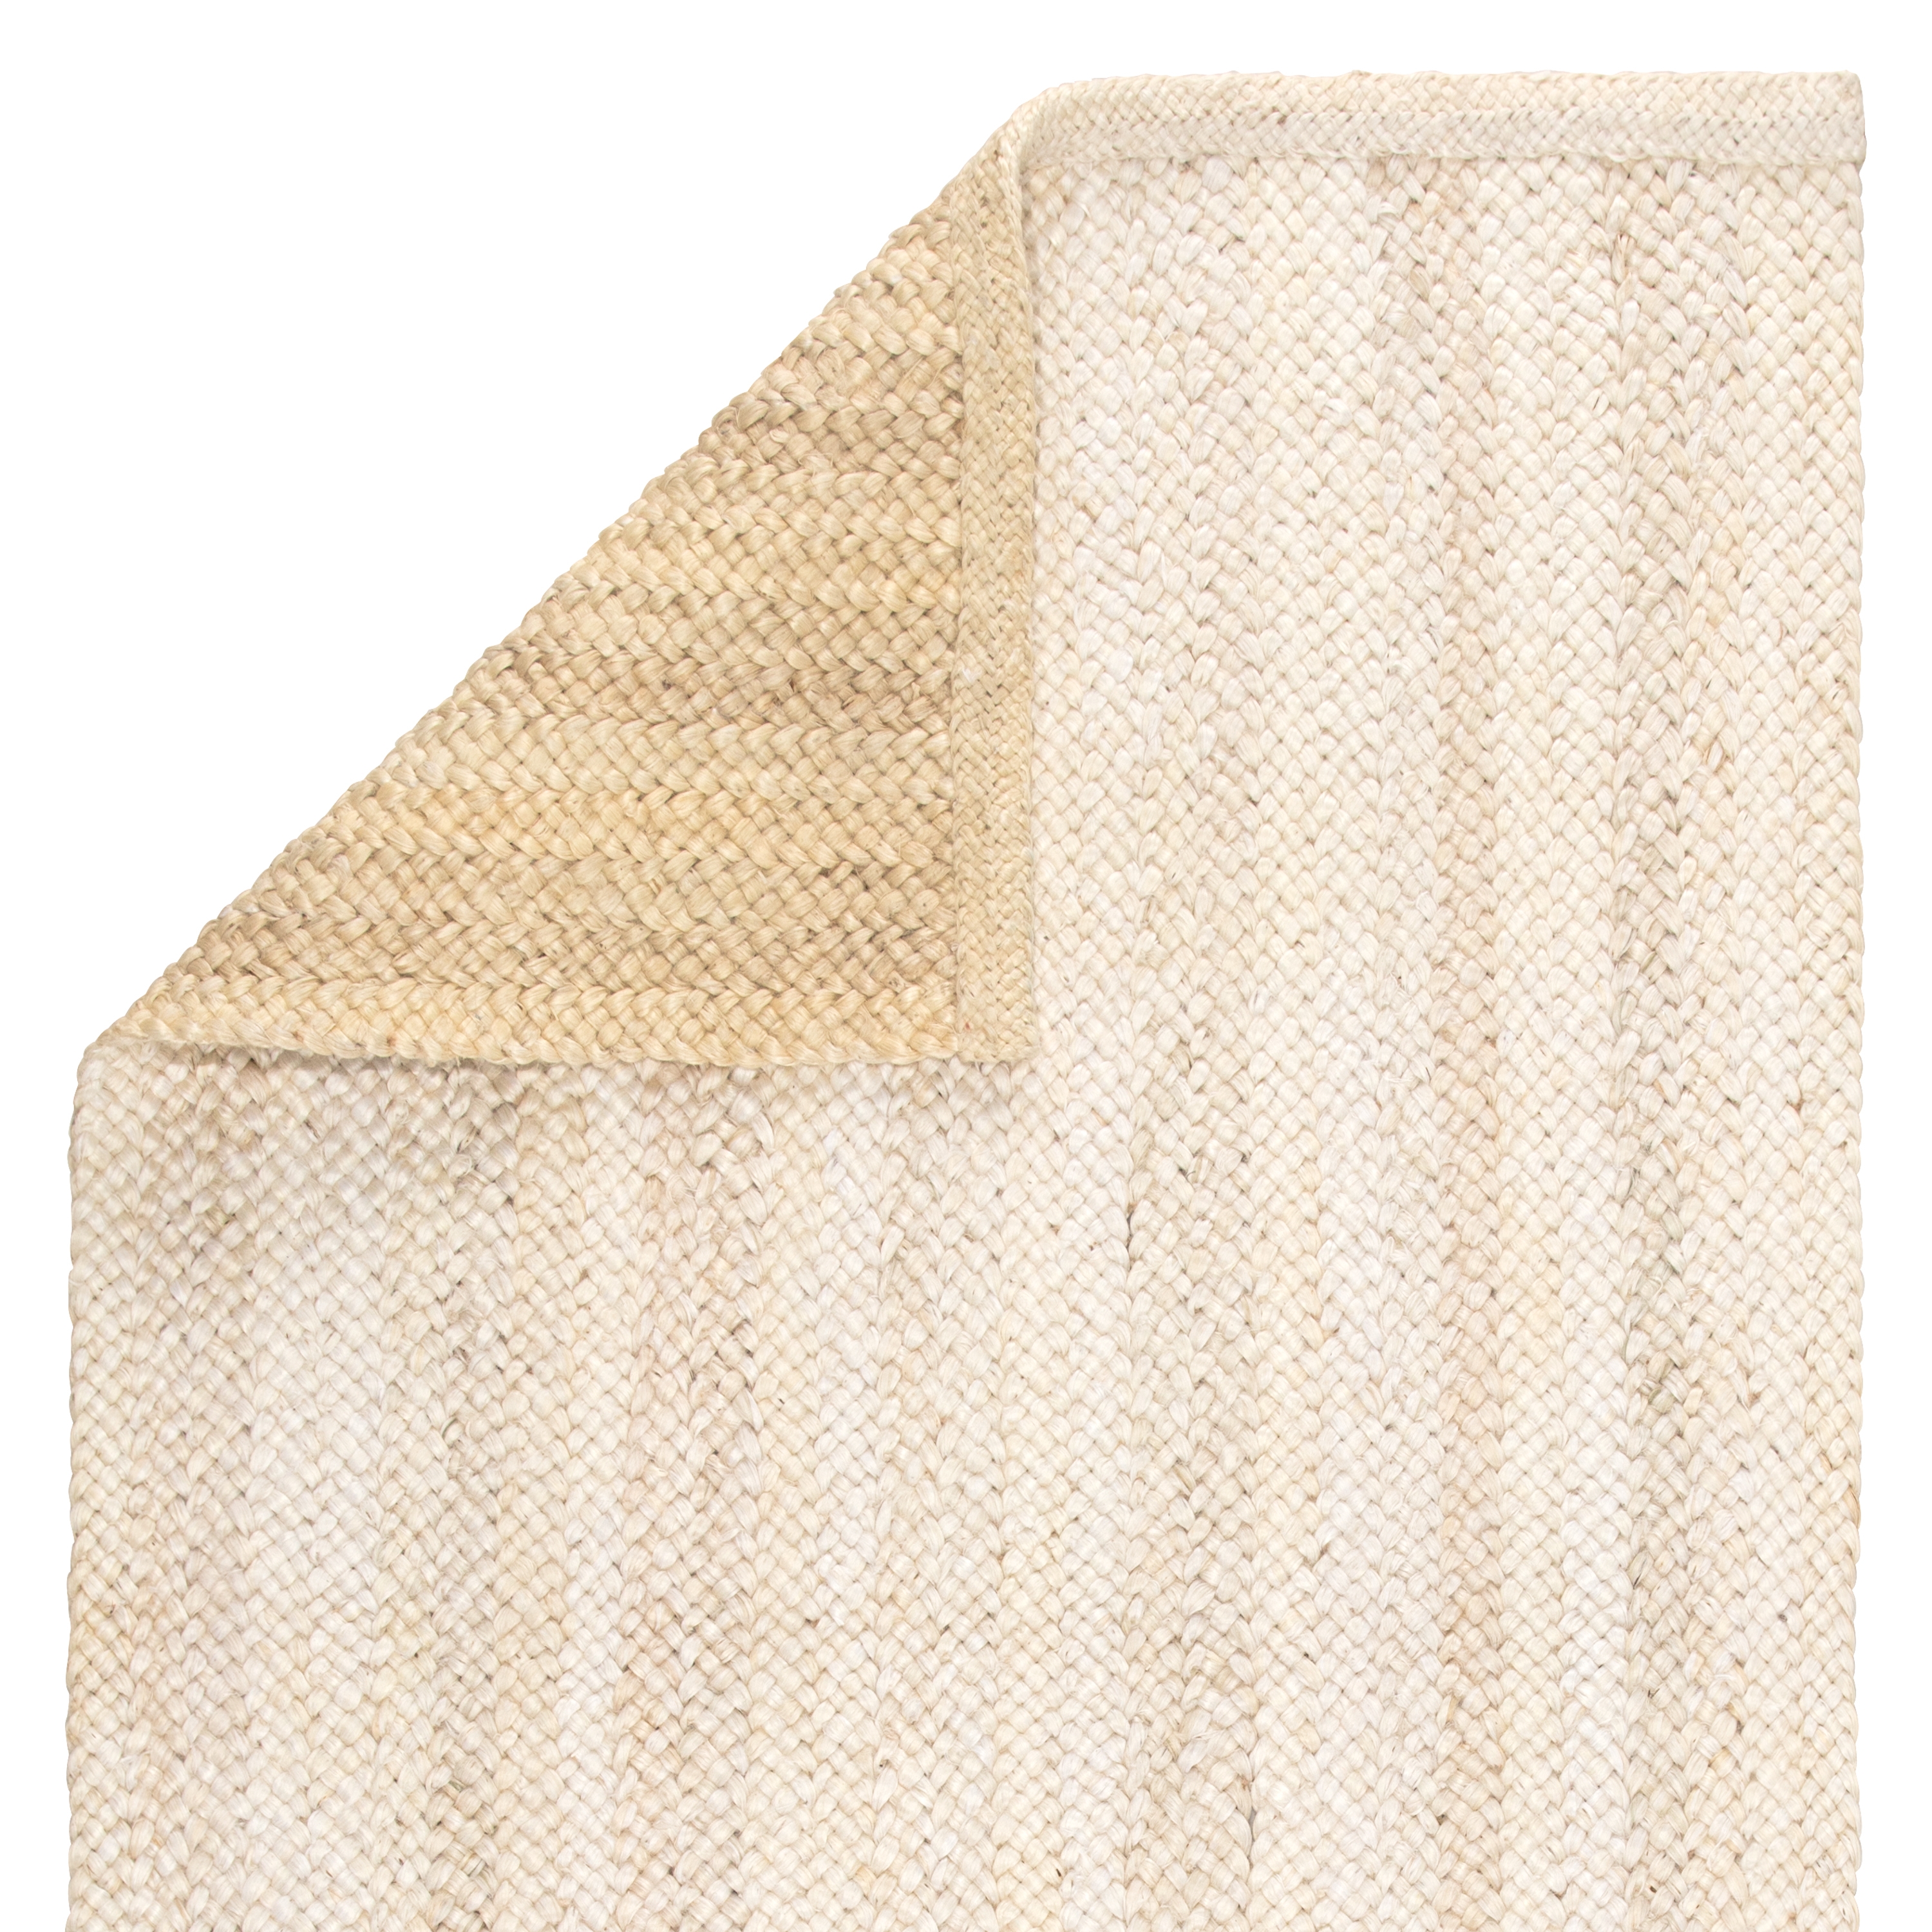 Anichini Natural Solid Ivory/ Beige Area Rug (4'X6') - Image 2